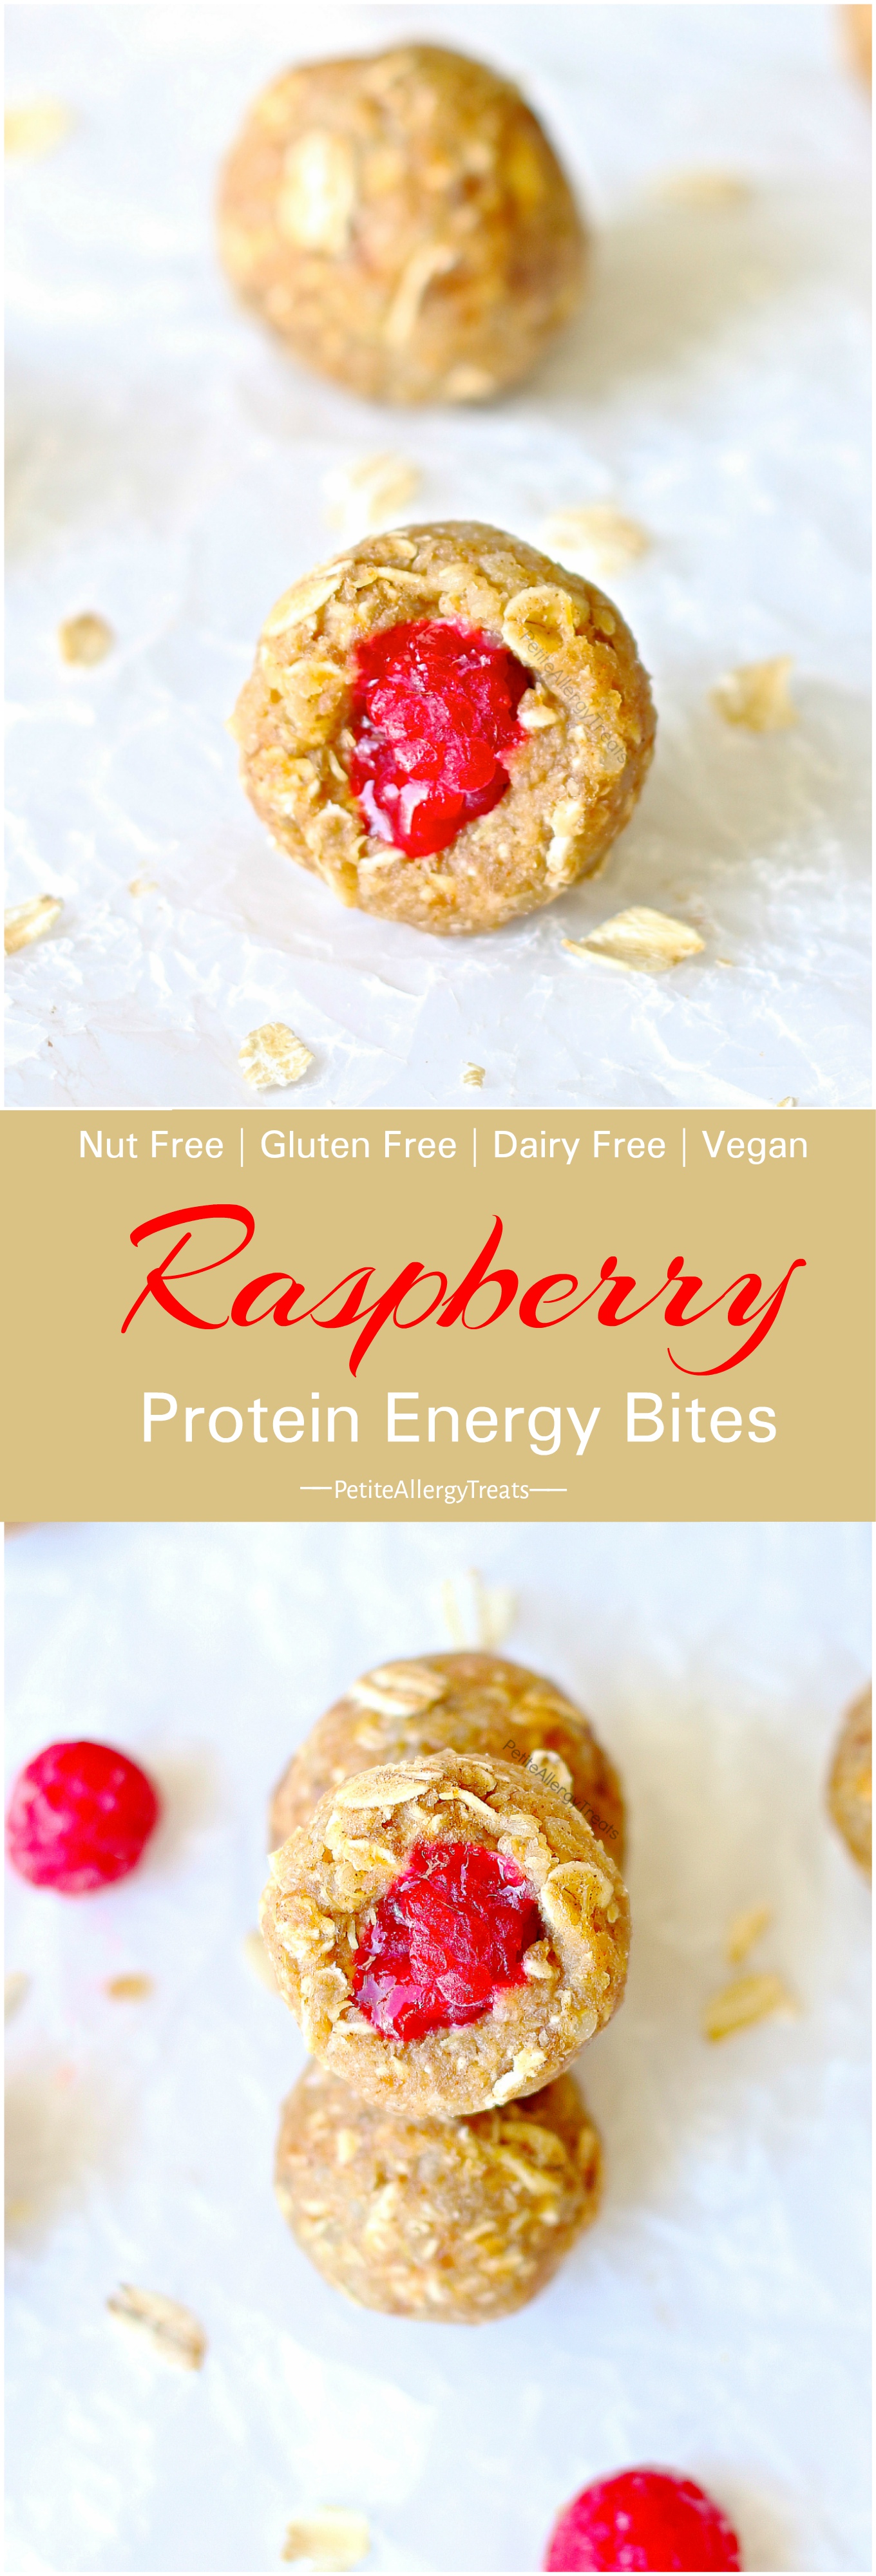 Nut Free Raspberry Protein Bites Recipe (gluten free vegan) Easy no bake protein energy balls filled with raspberry! Food Allergy friendly too- dairy free, soy free! 